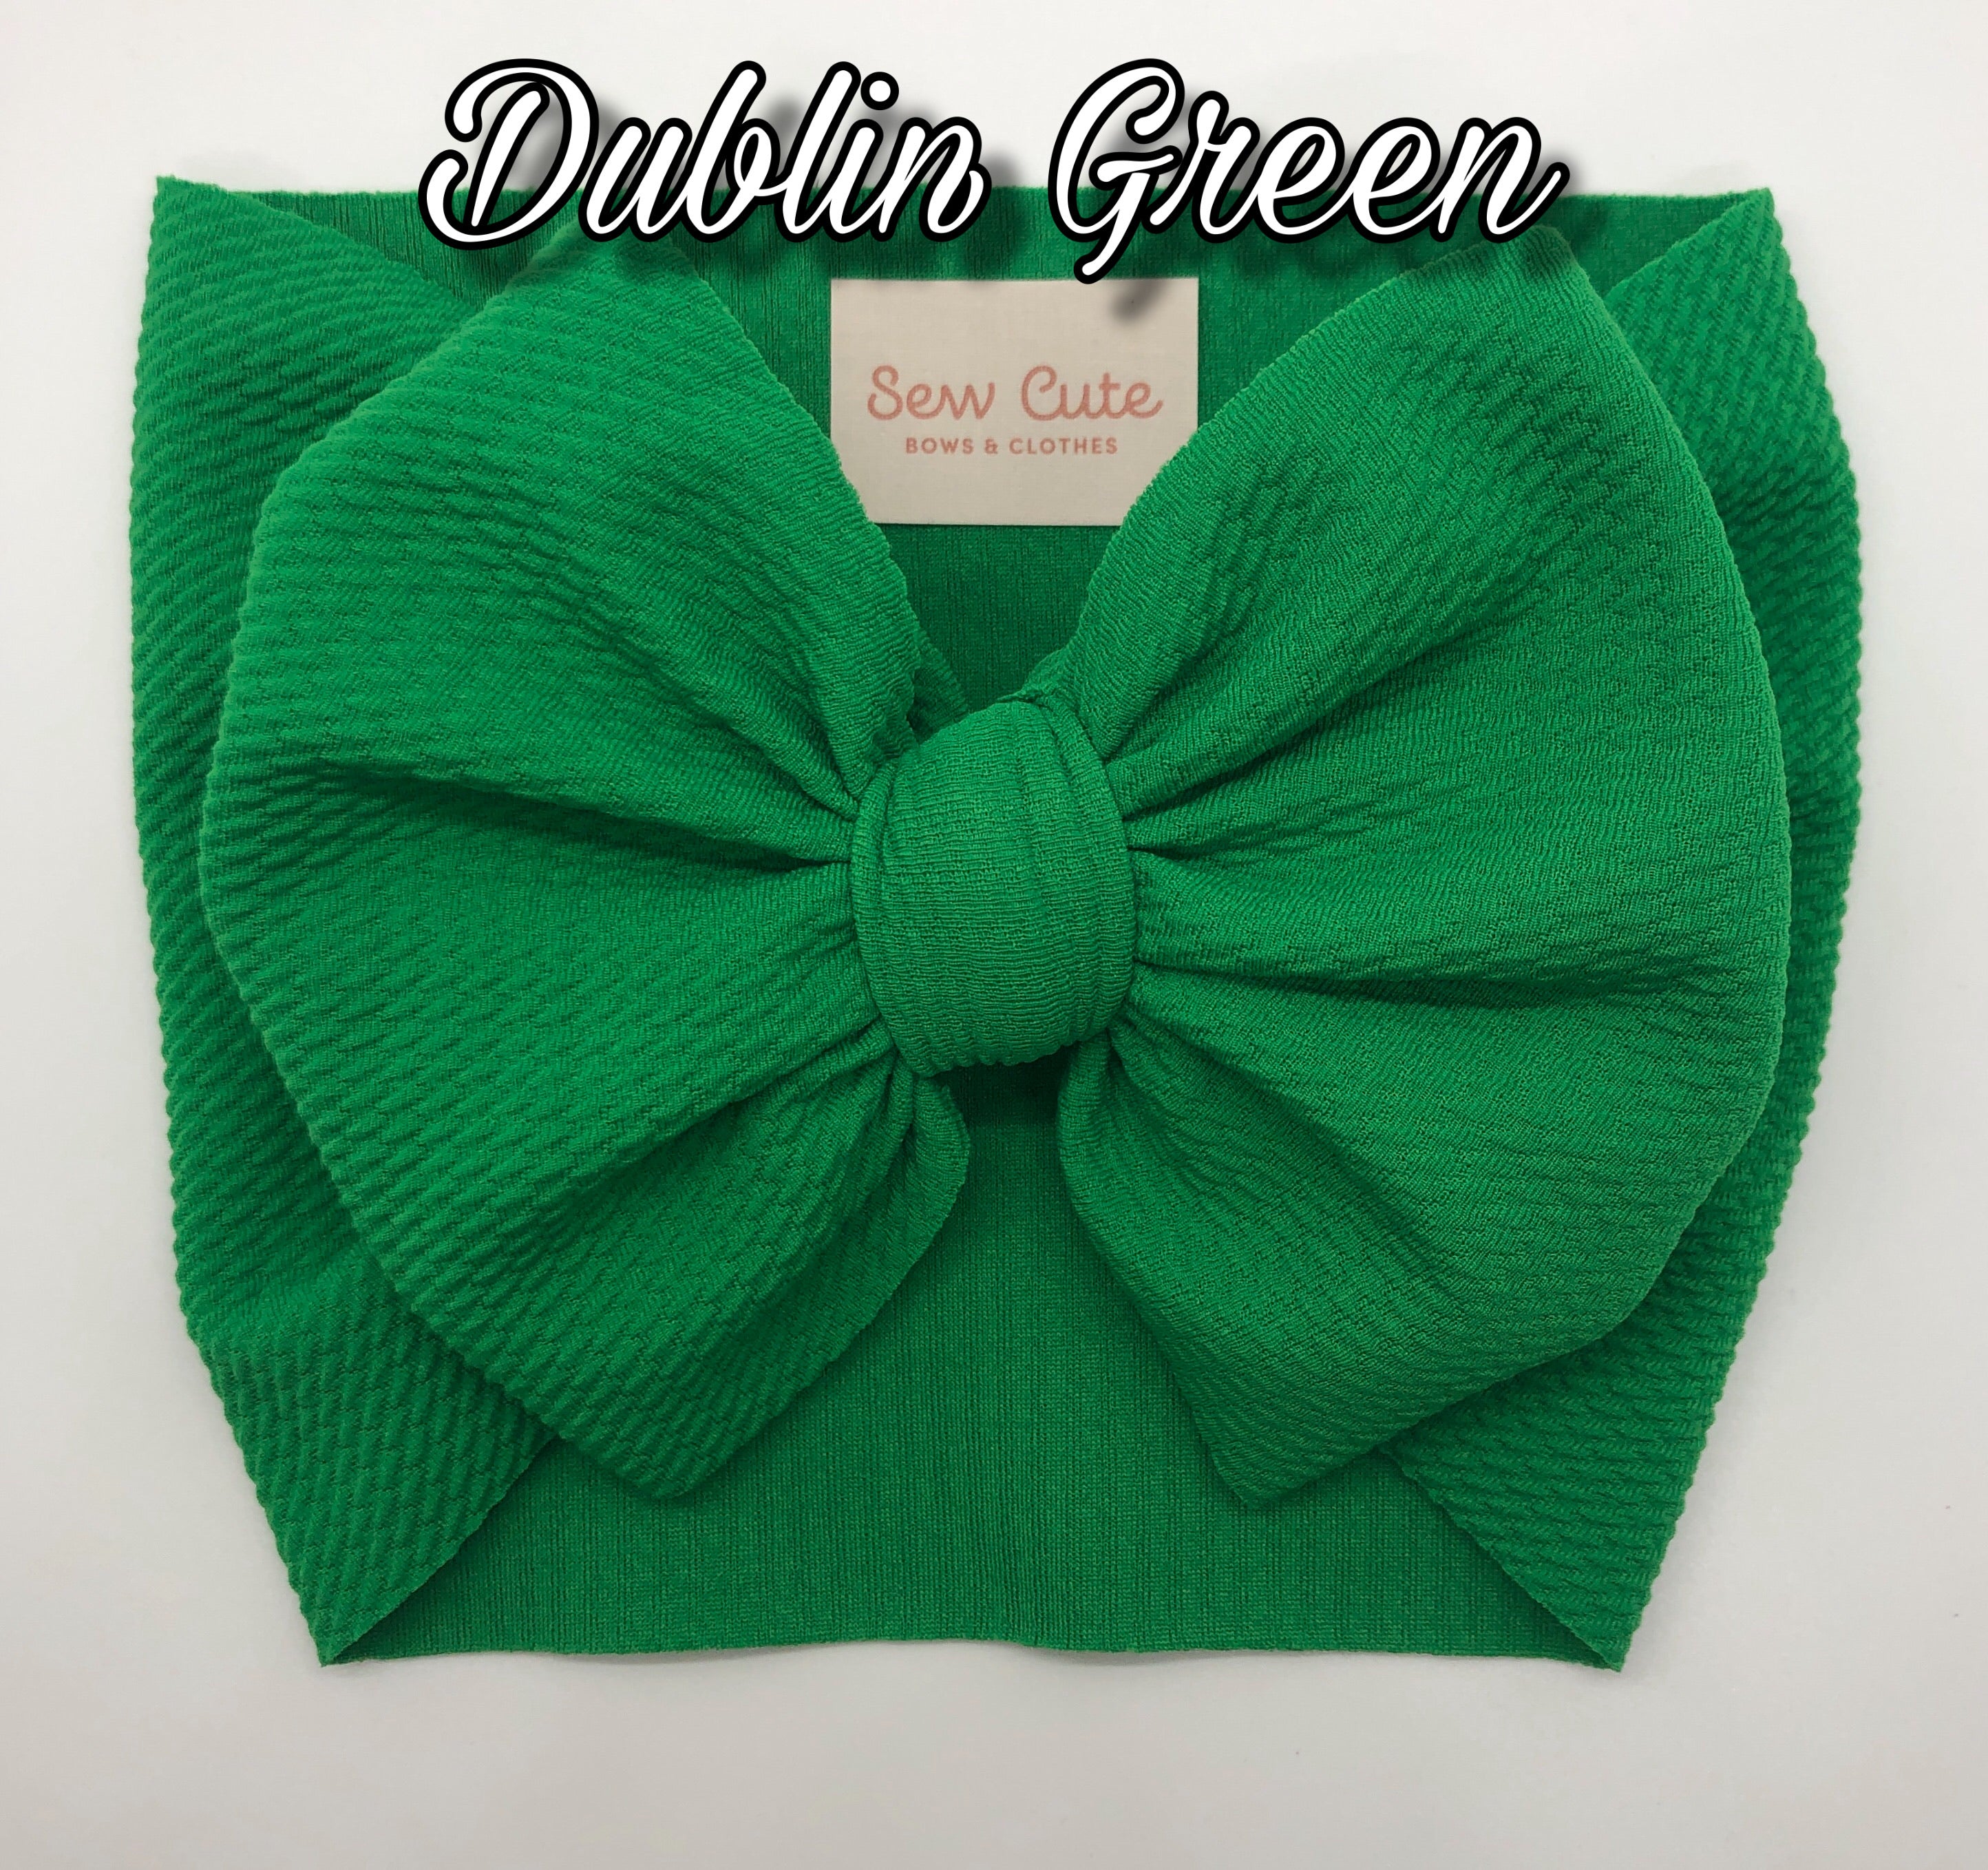 Dublin Green